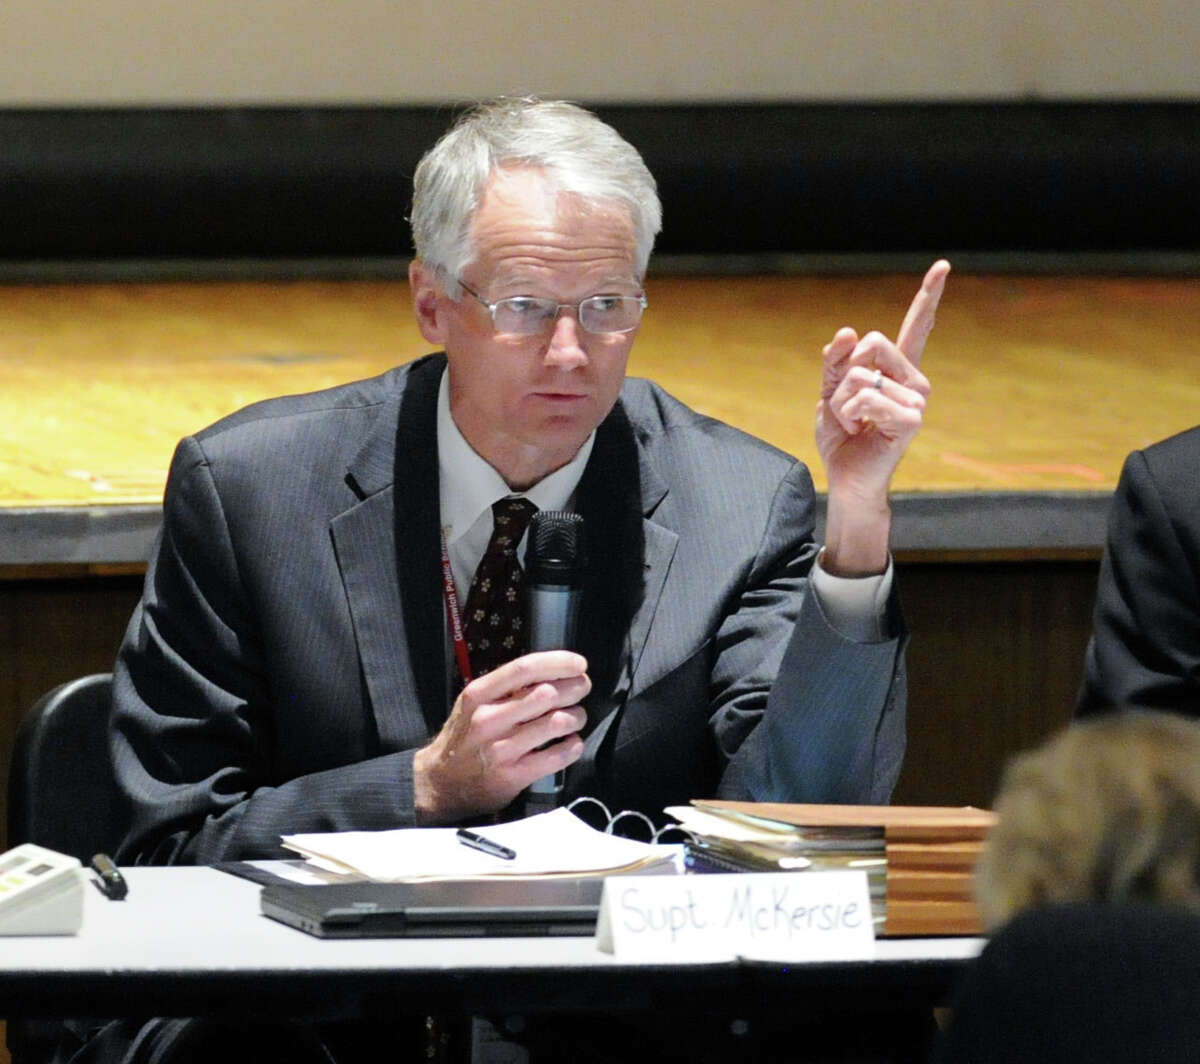 Peter Sherr, left, a school board member, has criticized Superintendent of Schools William McKersie, right.